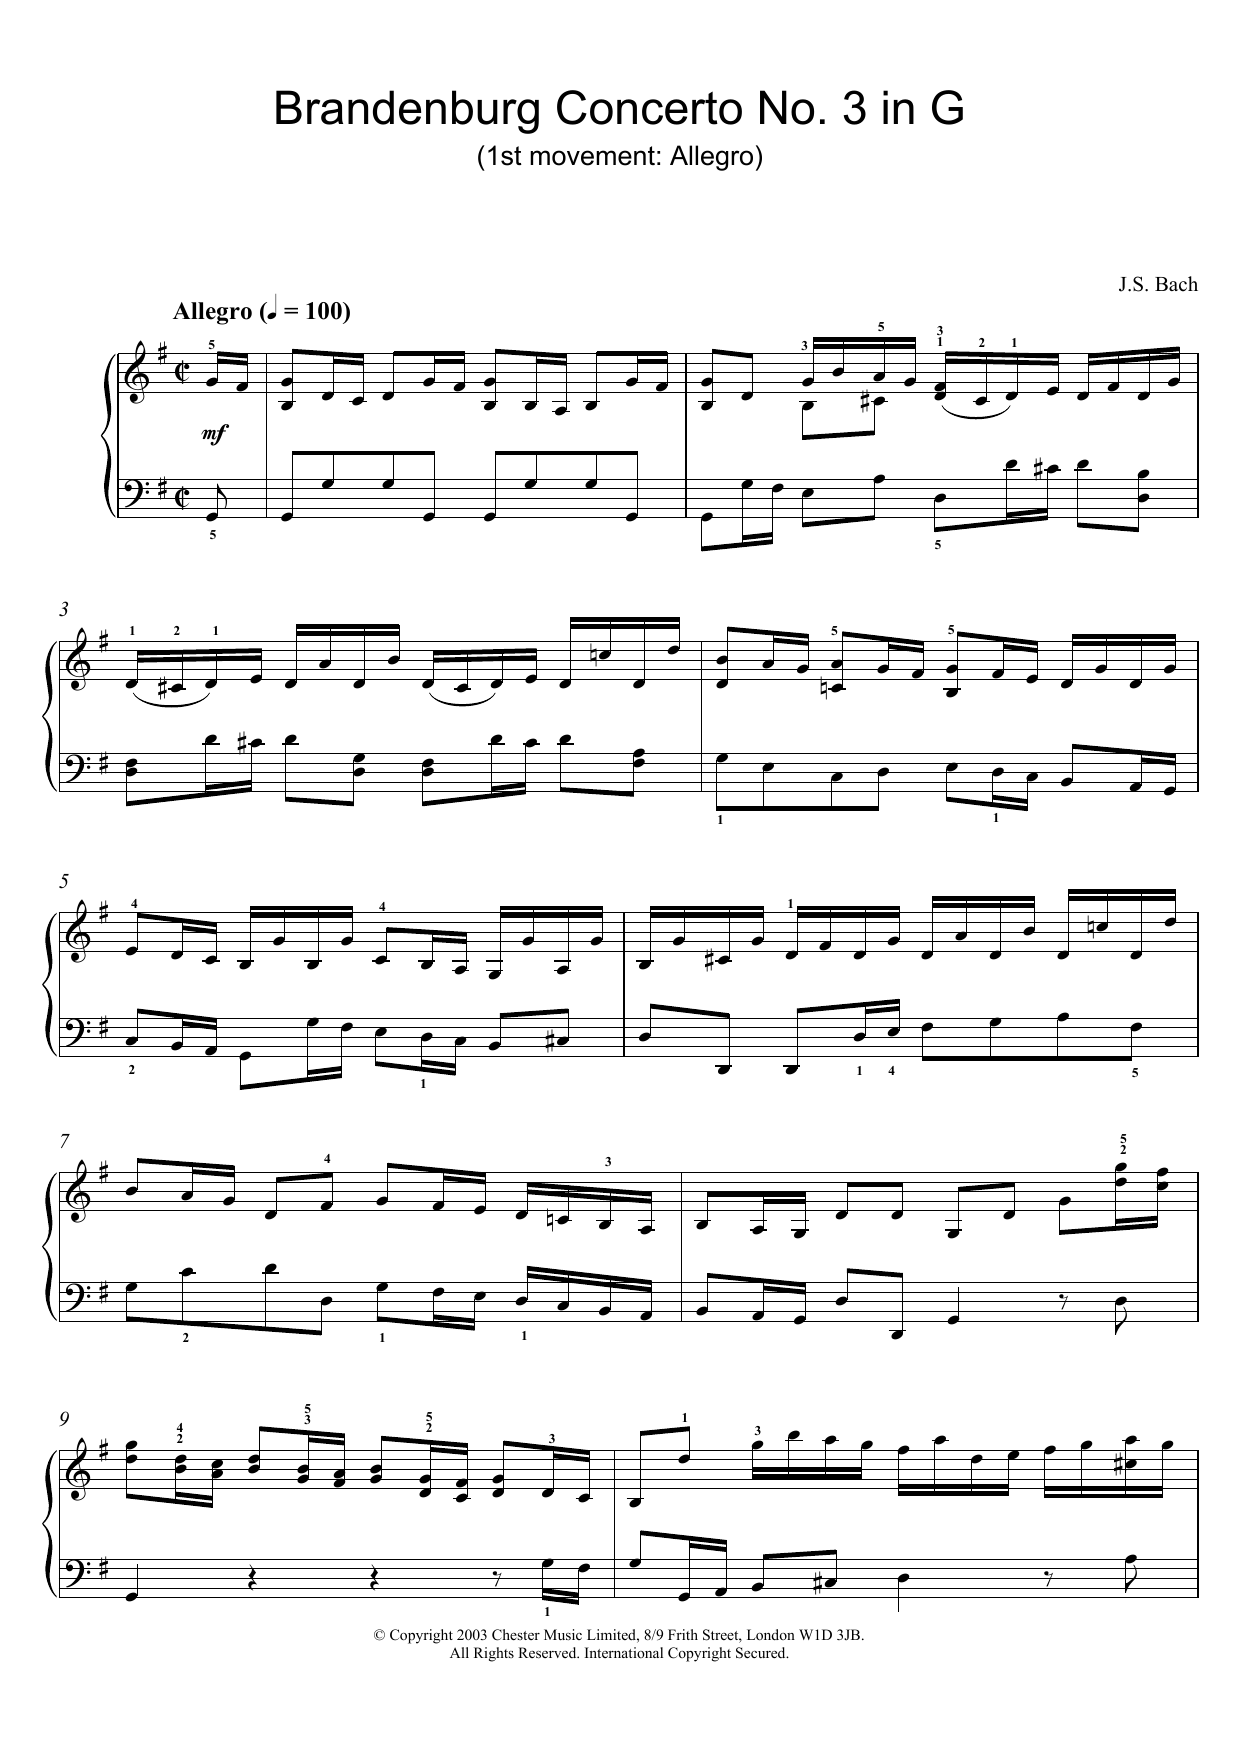 Johann Sebastian Bach Brandenburg Concerto No. 3 in G (1st movement: Allegro) Sheet Music Notes & Chords for Piano - Download or Print PDF